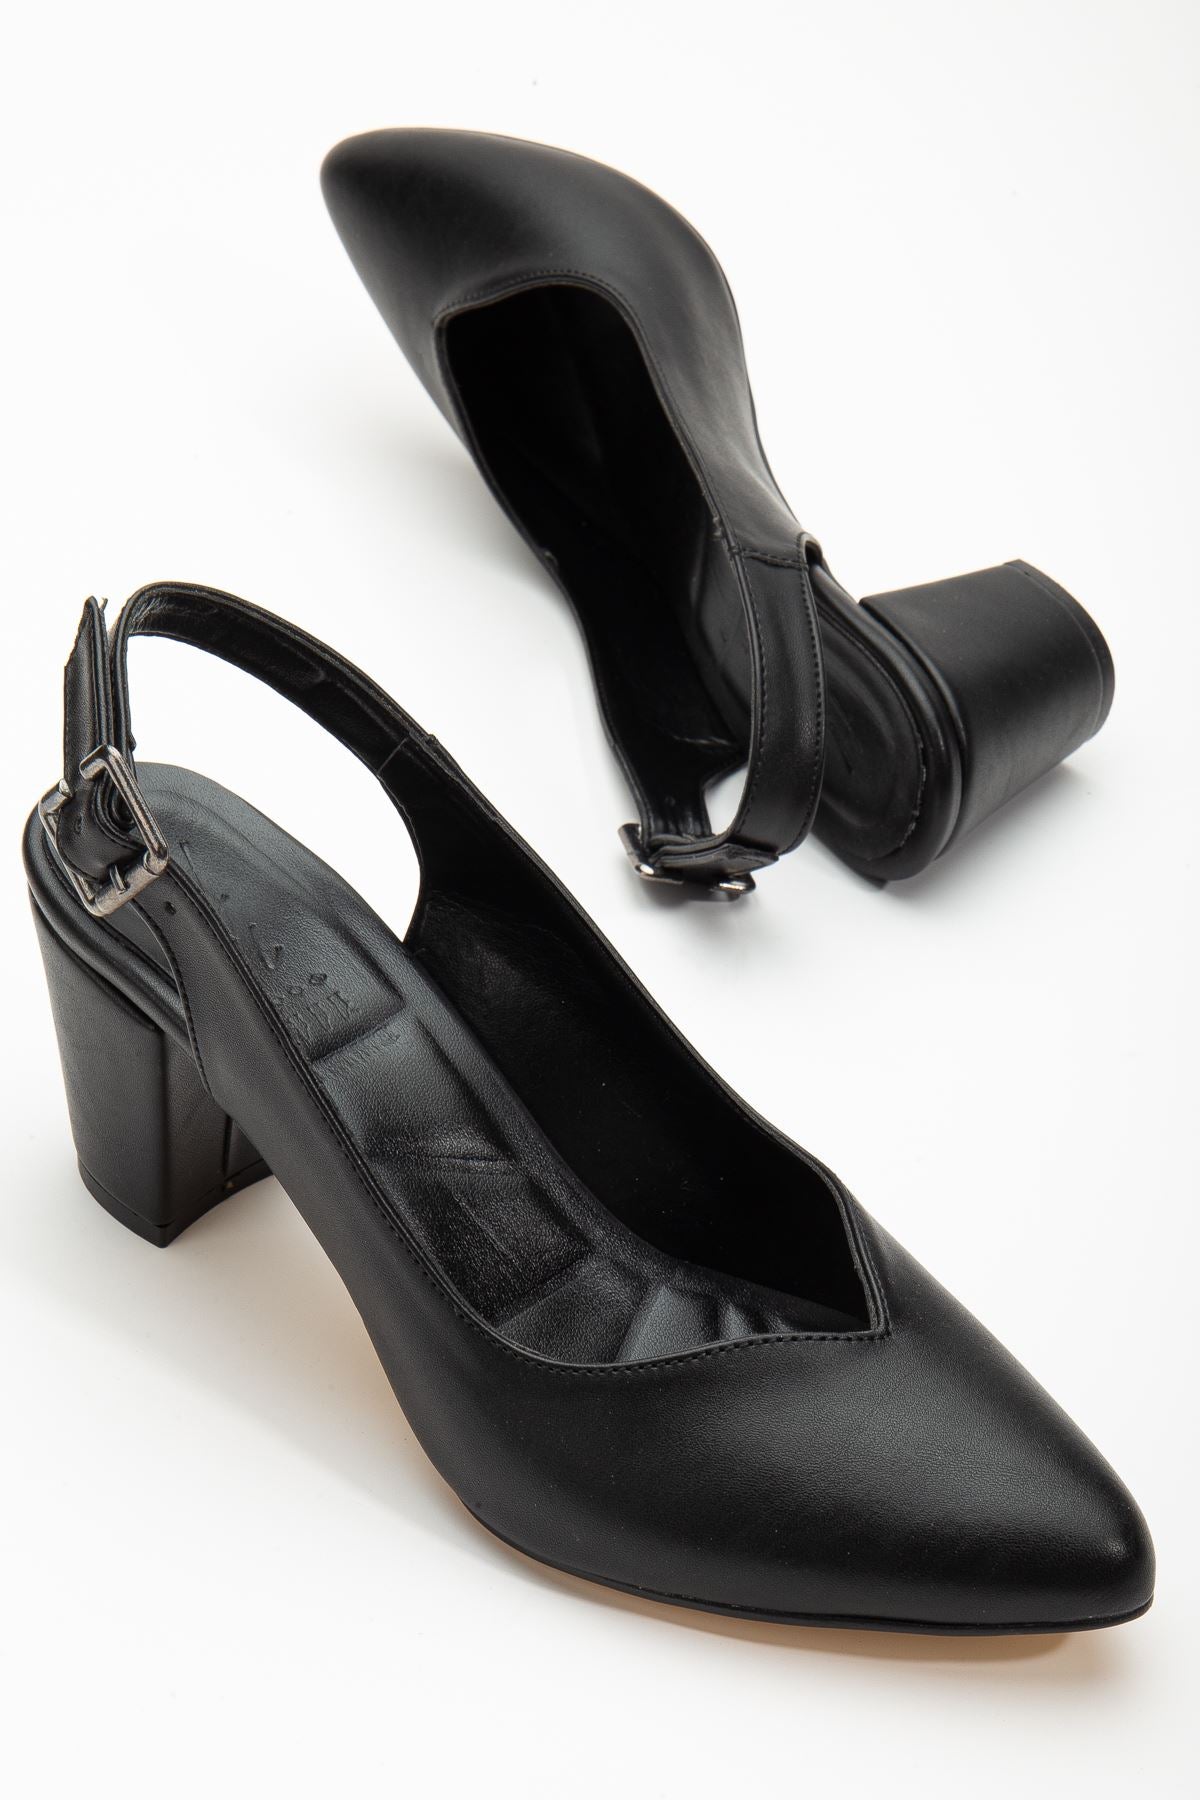 Milika Black Skin Pointed Toe High Heels Women's Shoes